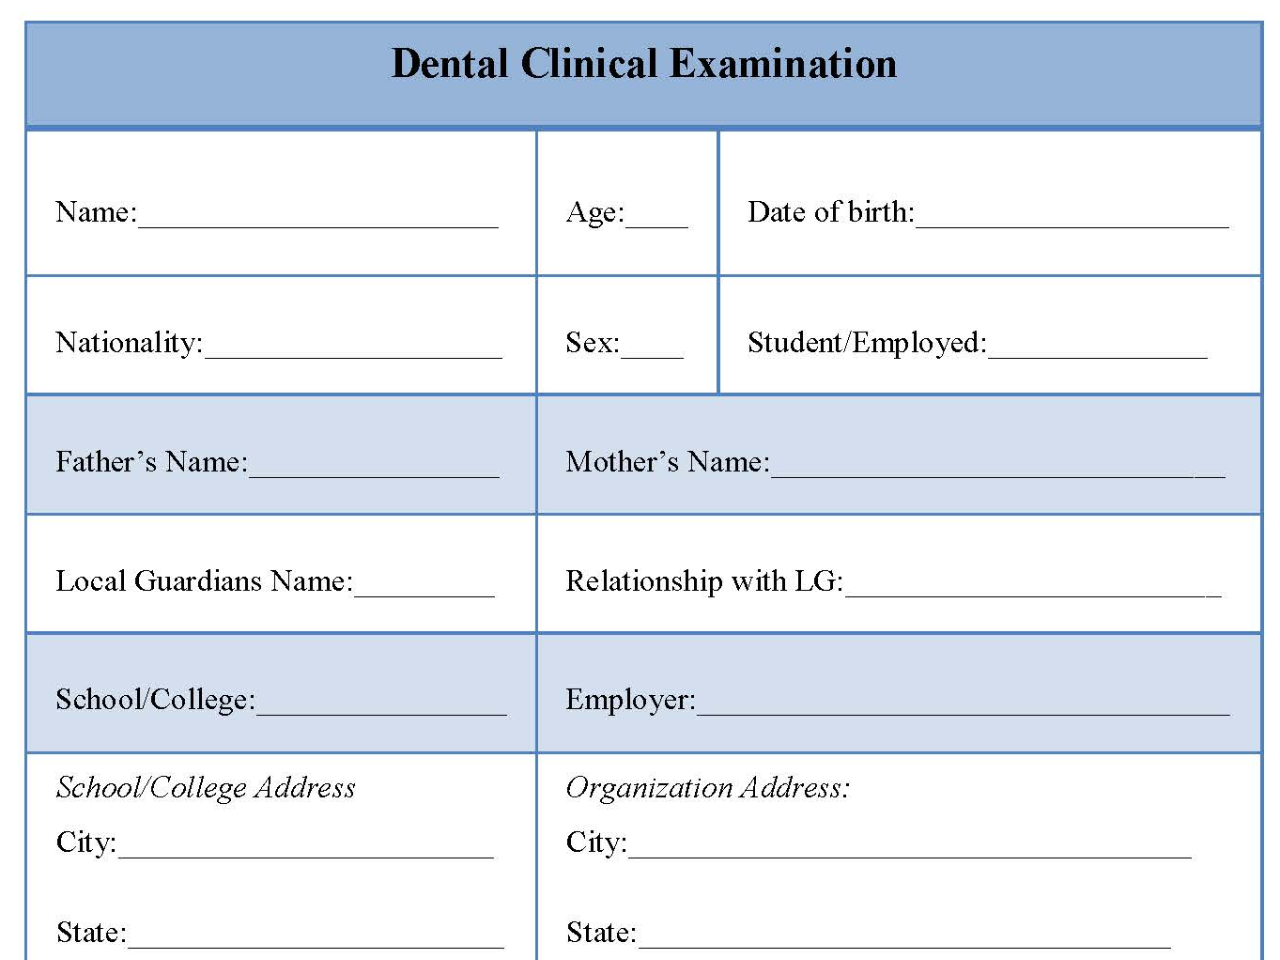 Dental Clinical Examination Form